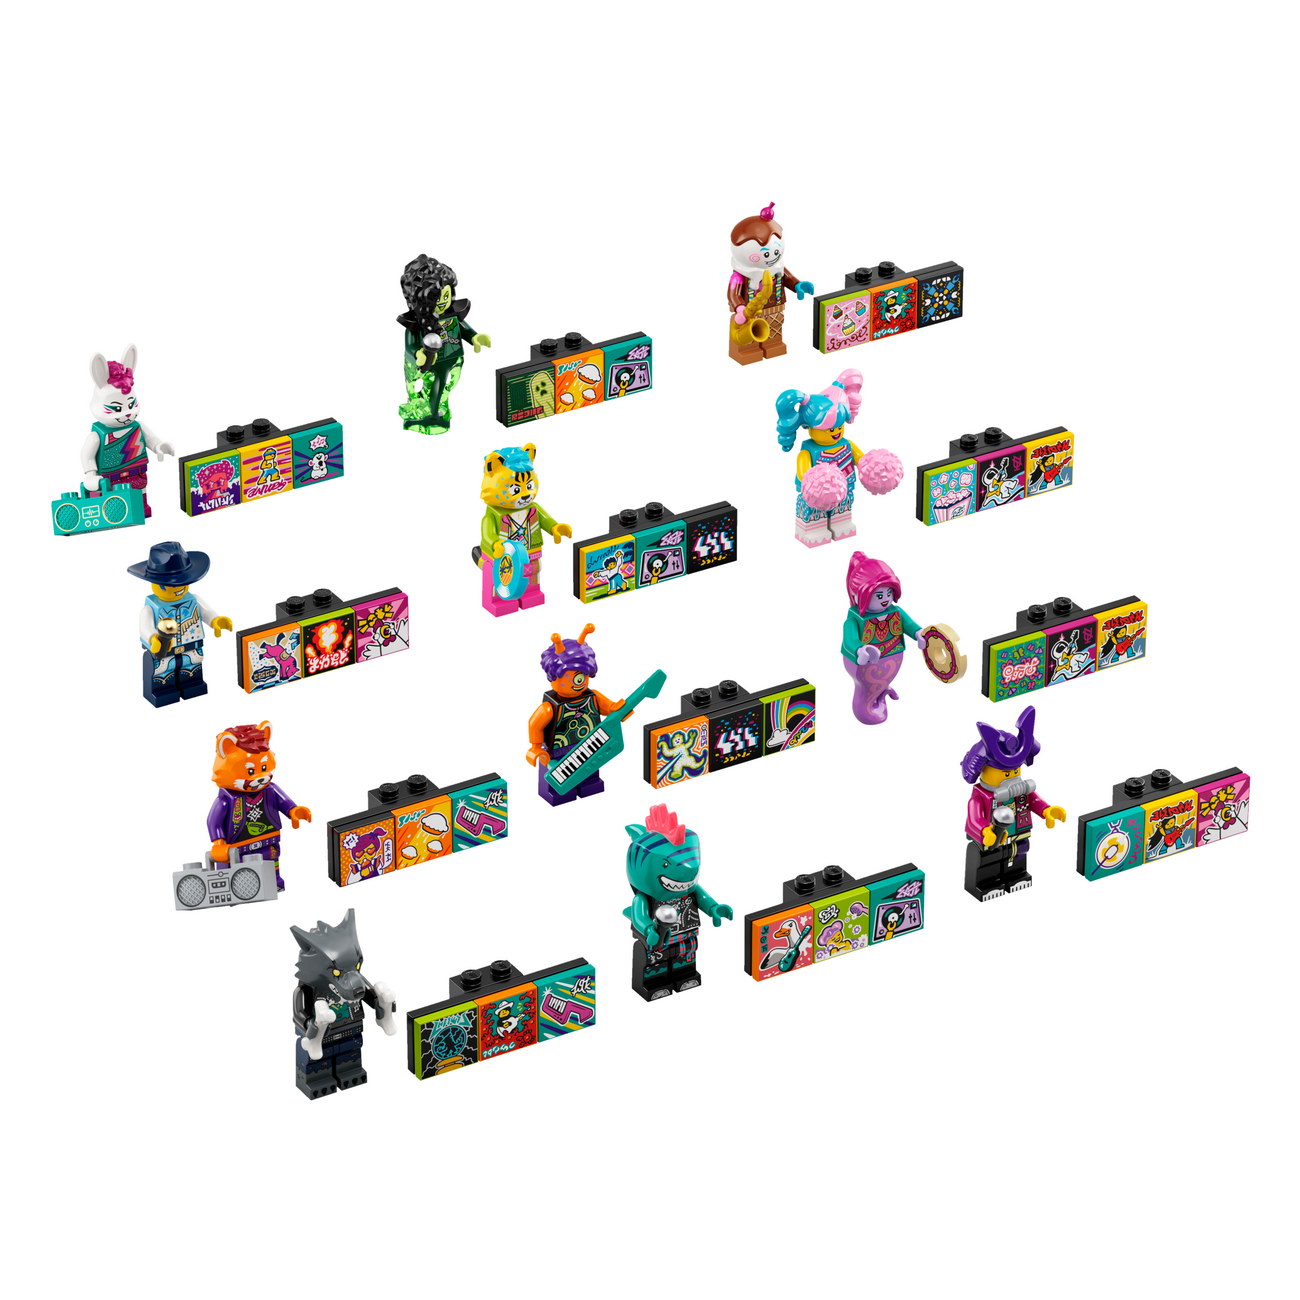 LEGO VIDIYO 43101 - Bandmates Überraschungsbox